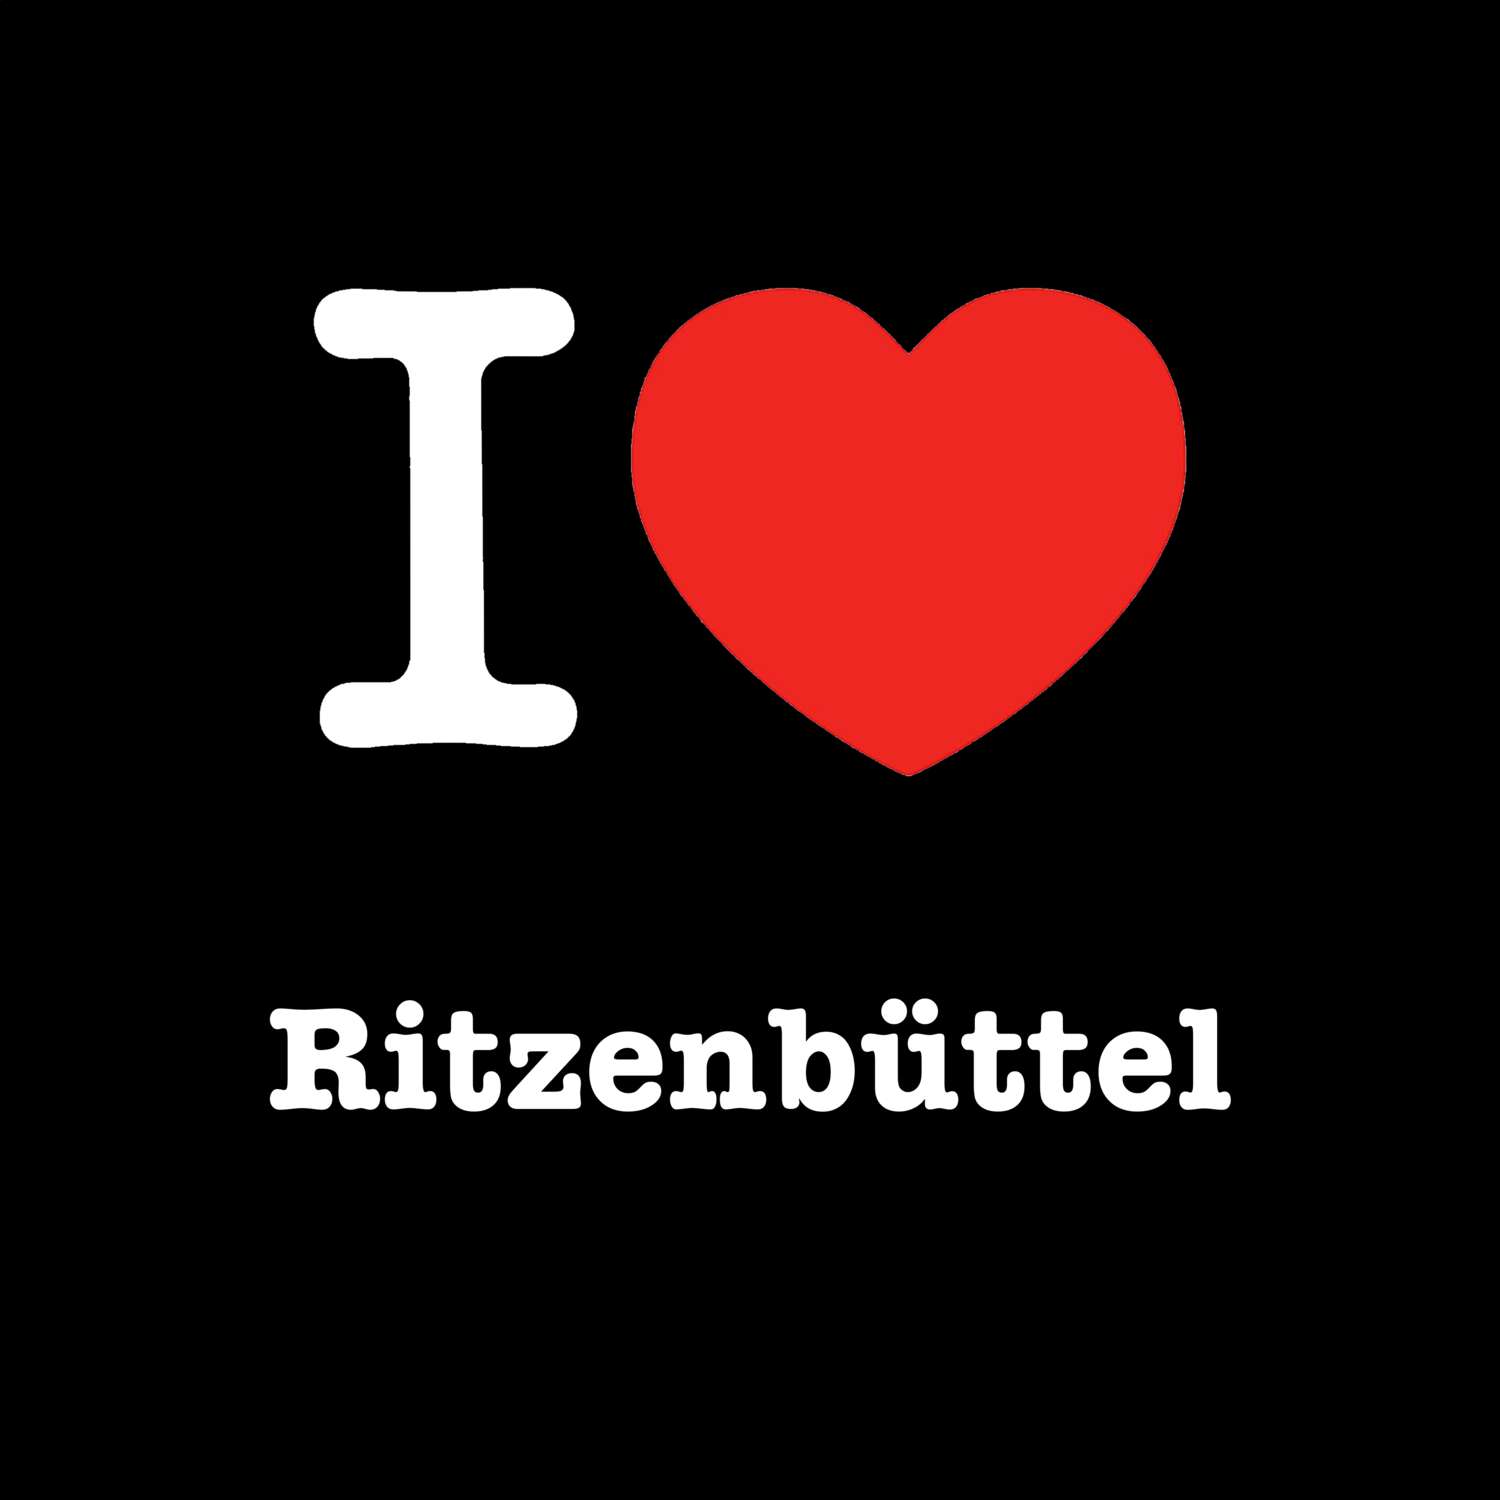 Ritzenbüttel T-Shirt »I love«